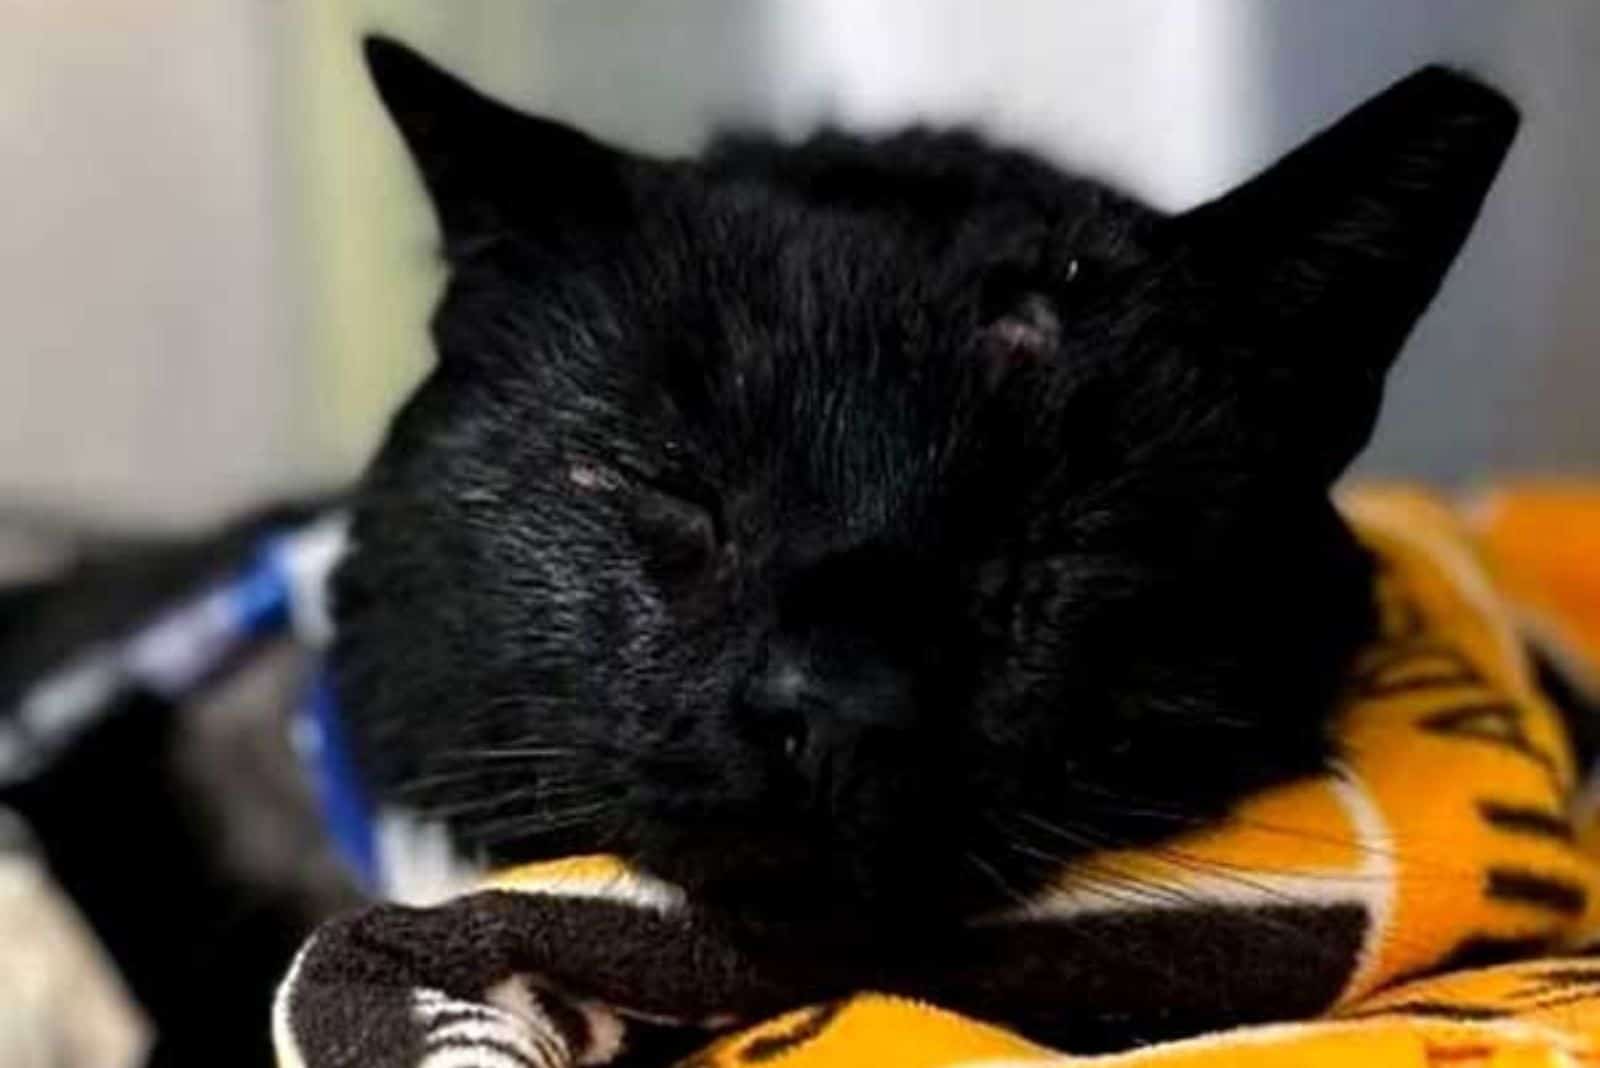 an injured black cat resting on a blanket